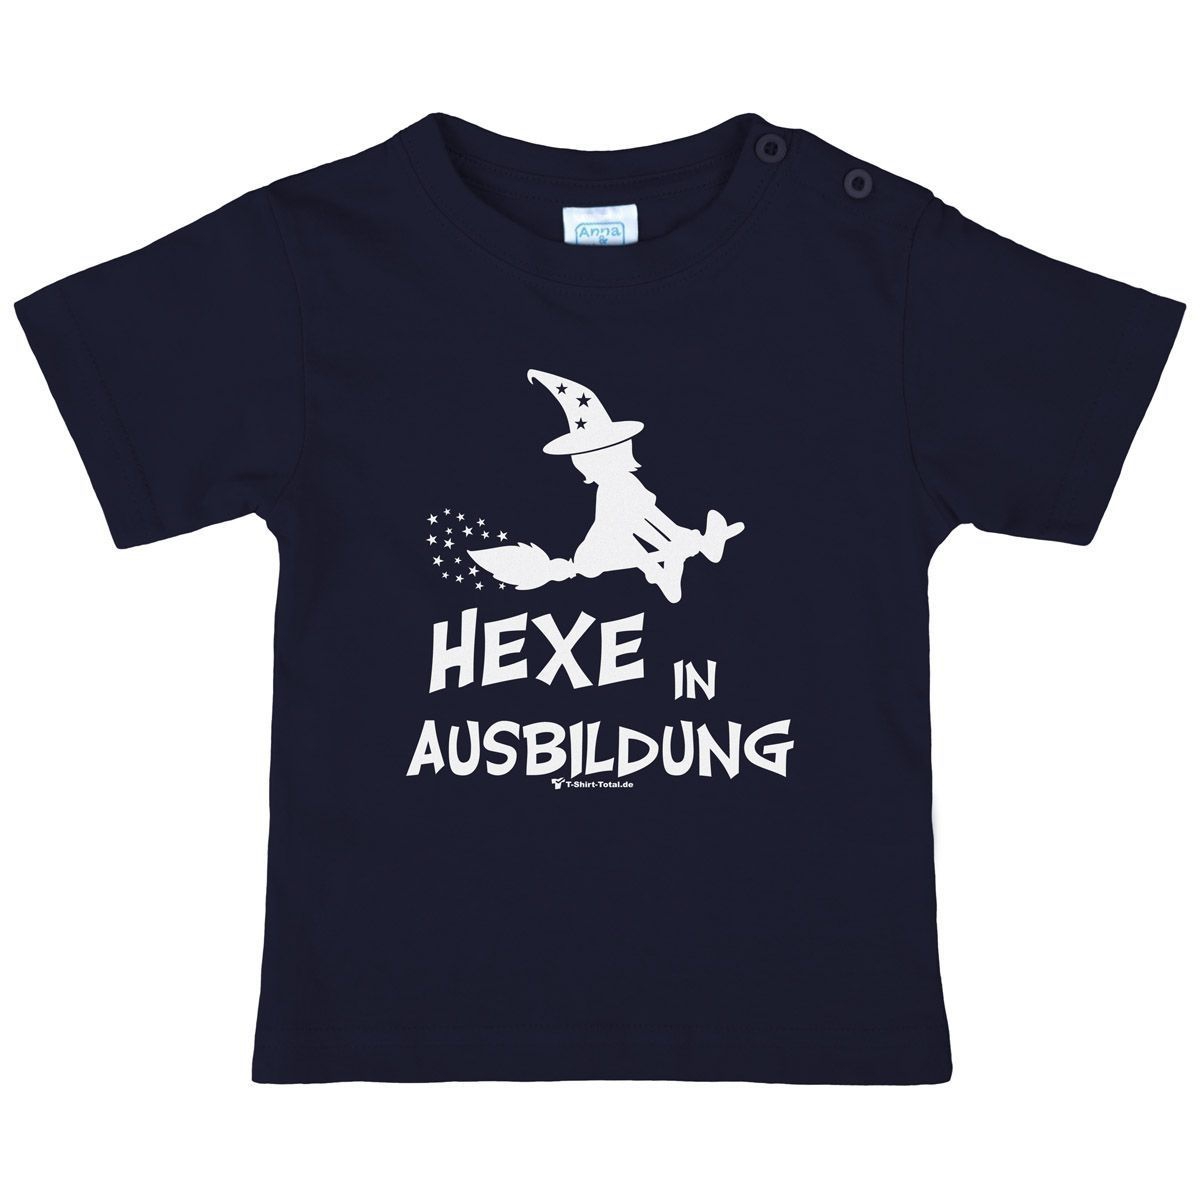 Hexe in Ausbildung Kinder T-Shirt navy 110 / 116